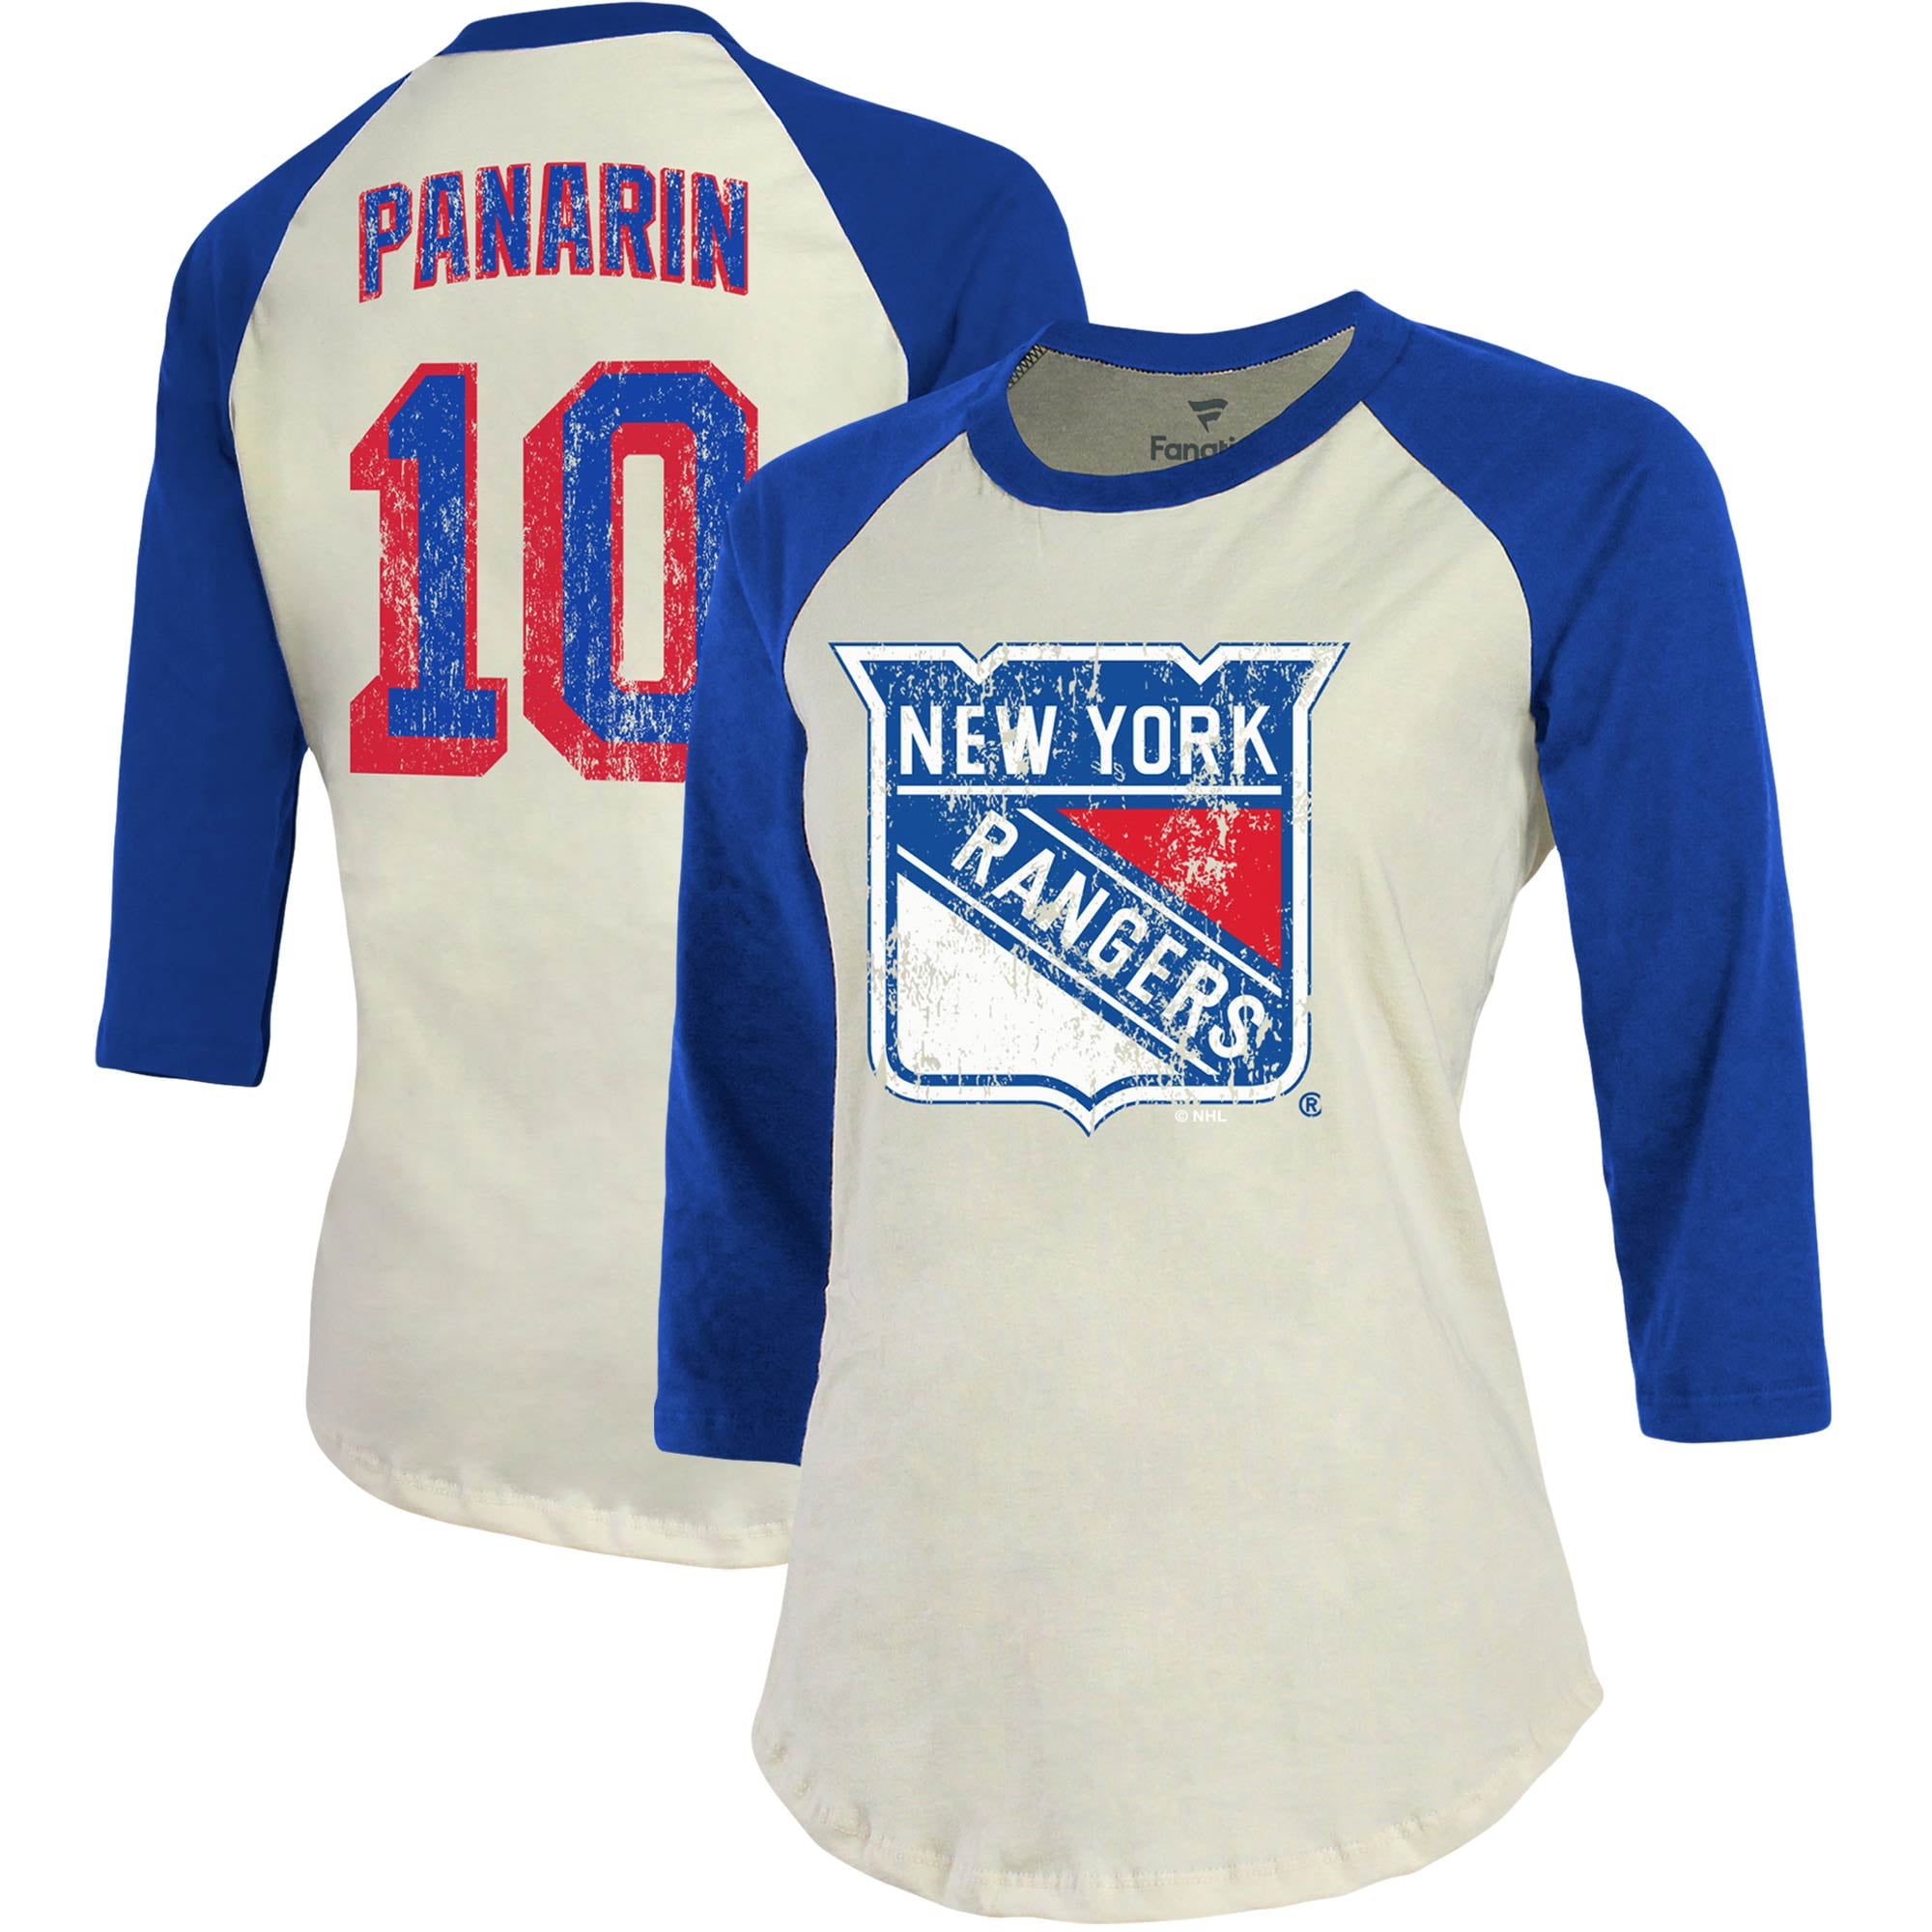 panarin shirt rangers